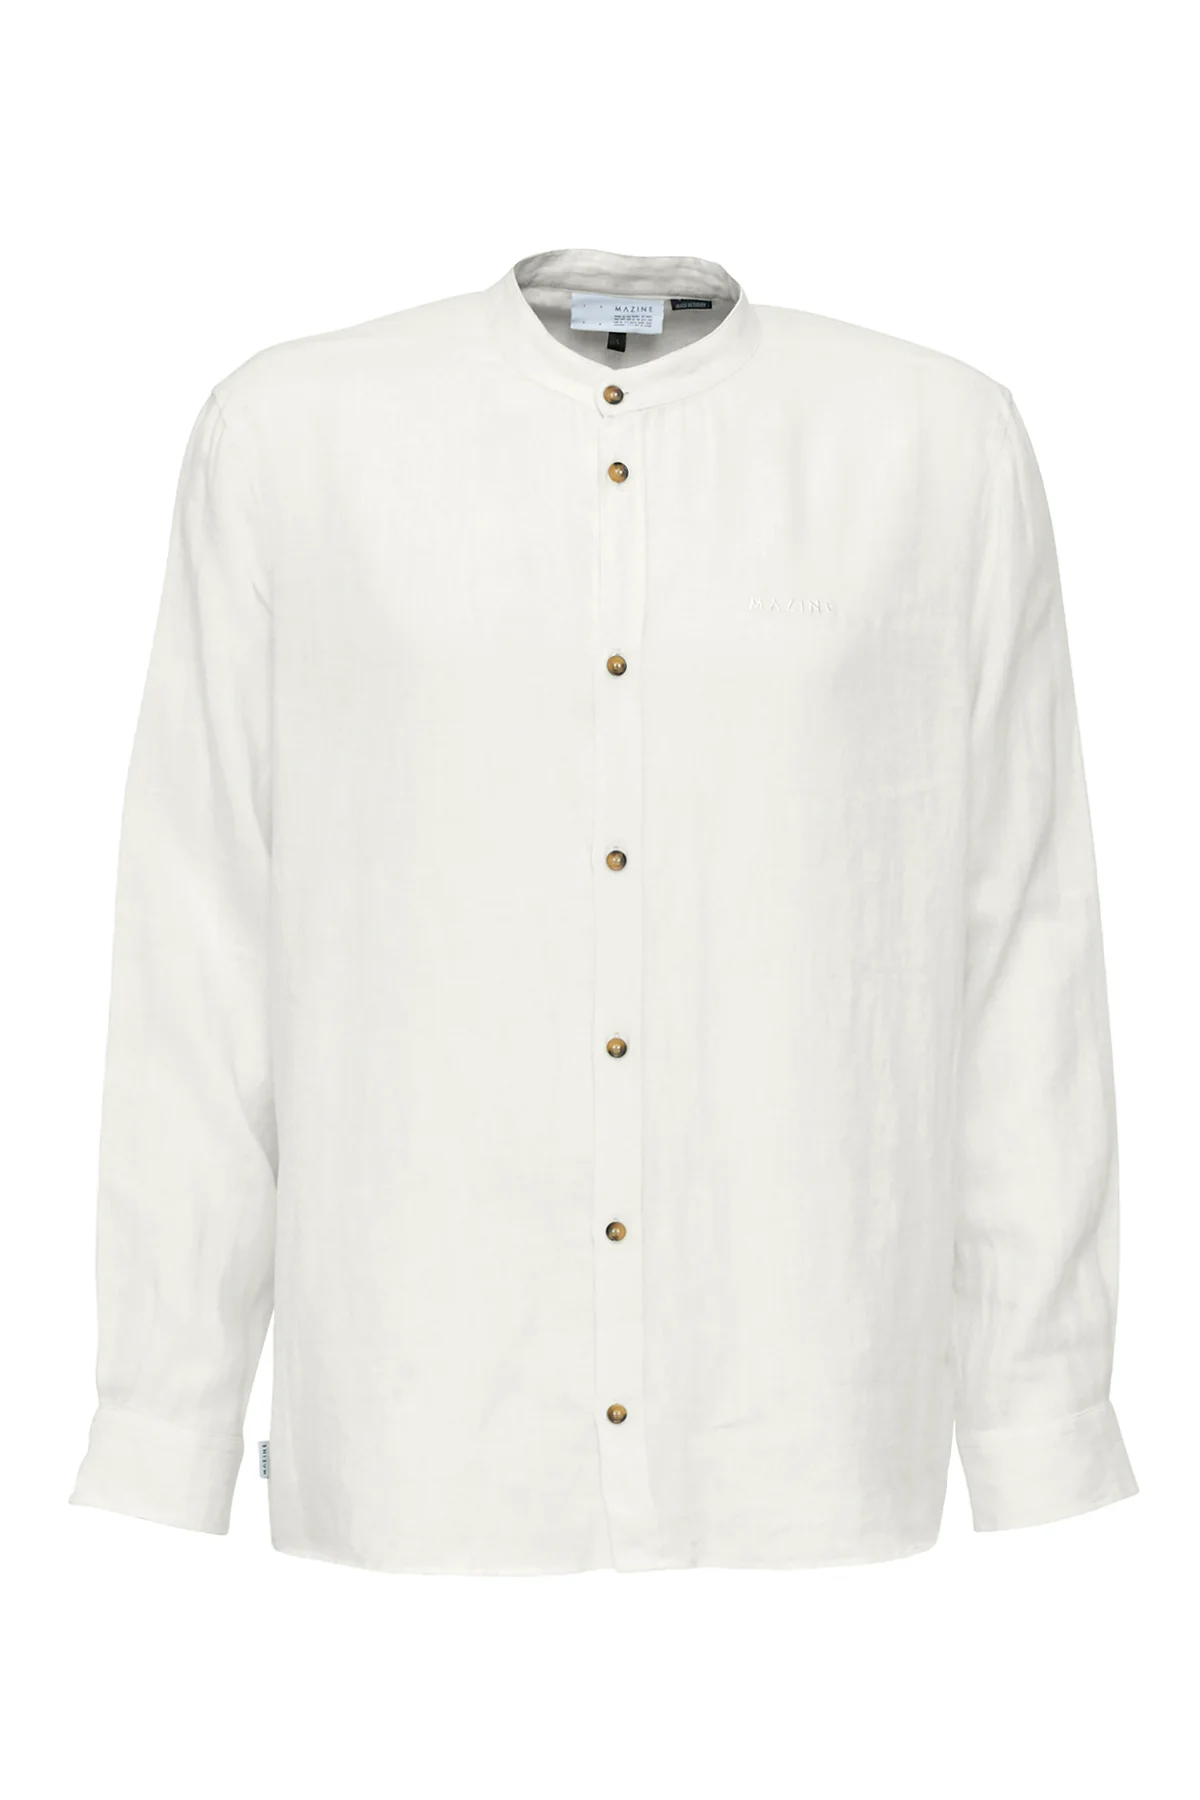 Mazine Altona Linen Shirt langarm - White